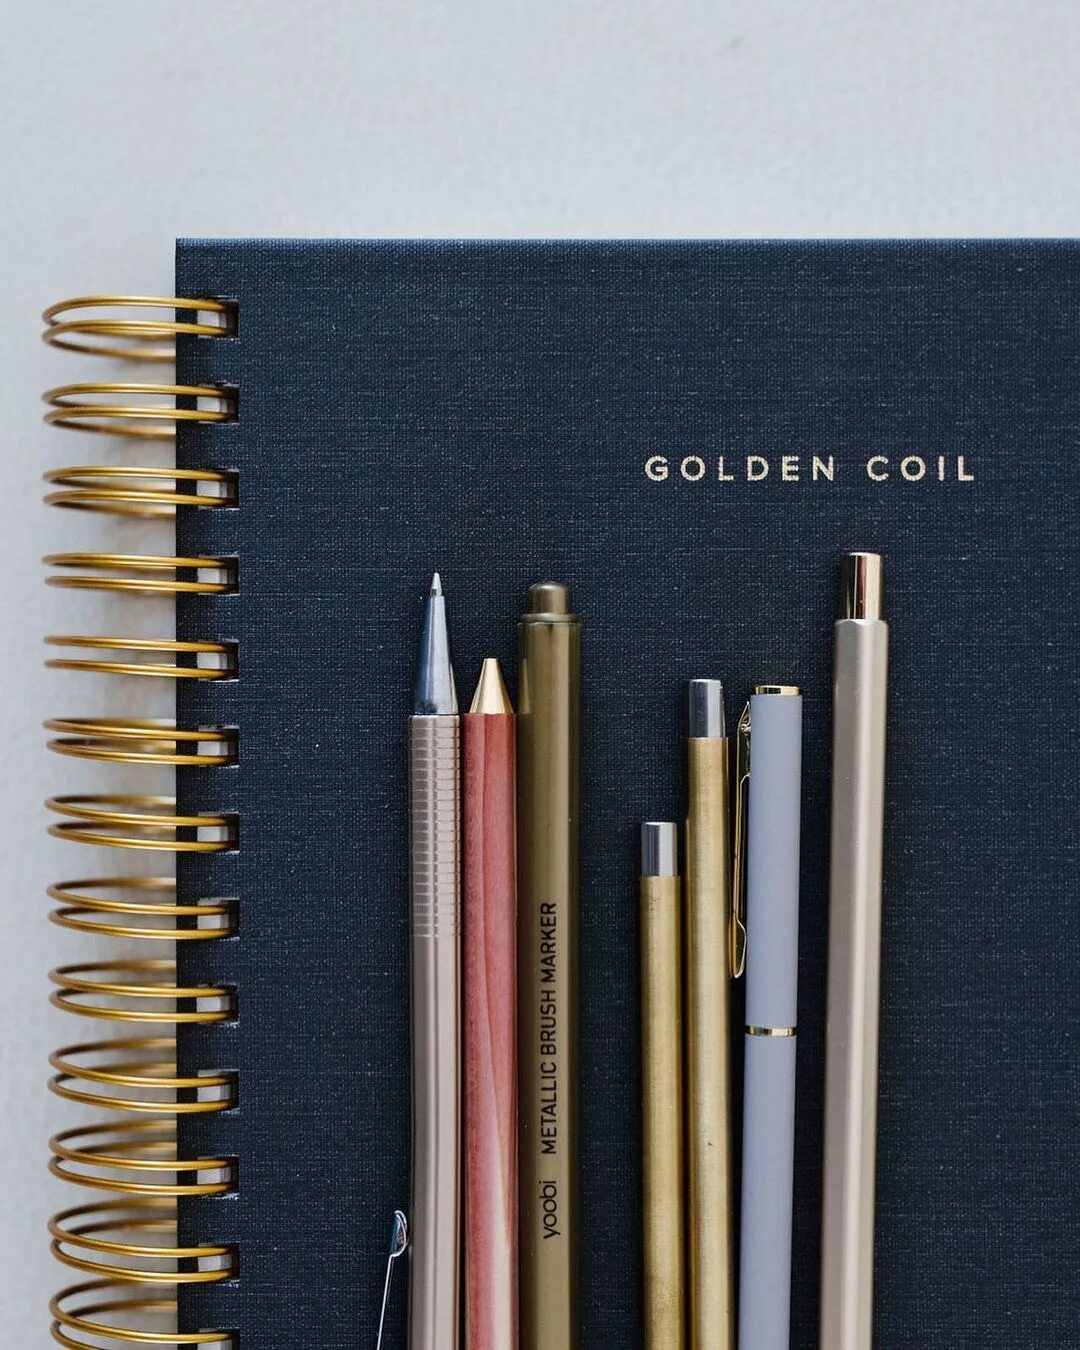 Golden coil тетрадь фото 86